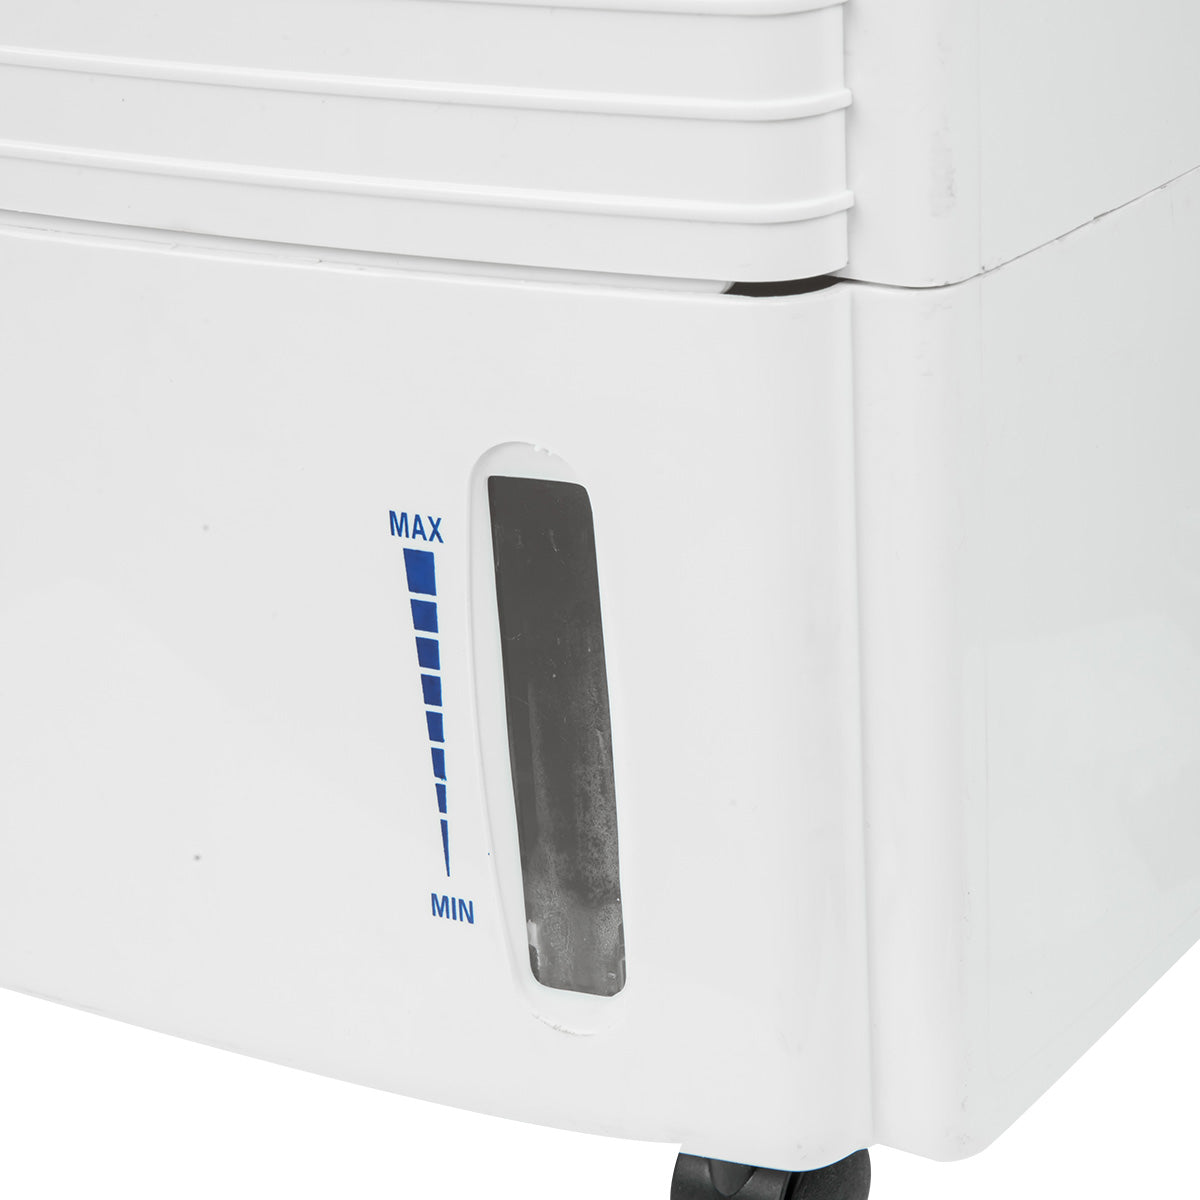 Pronti 10L Evaporative Cooler Air Humidifier Conditioner